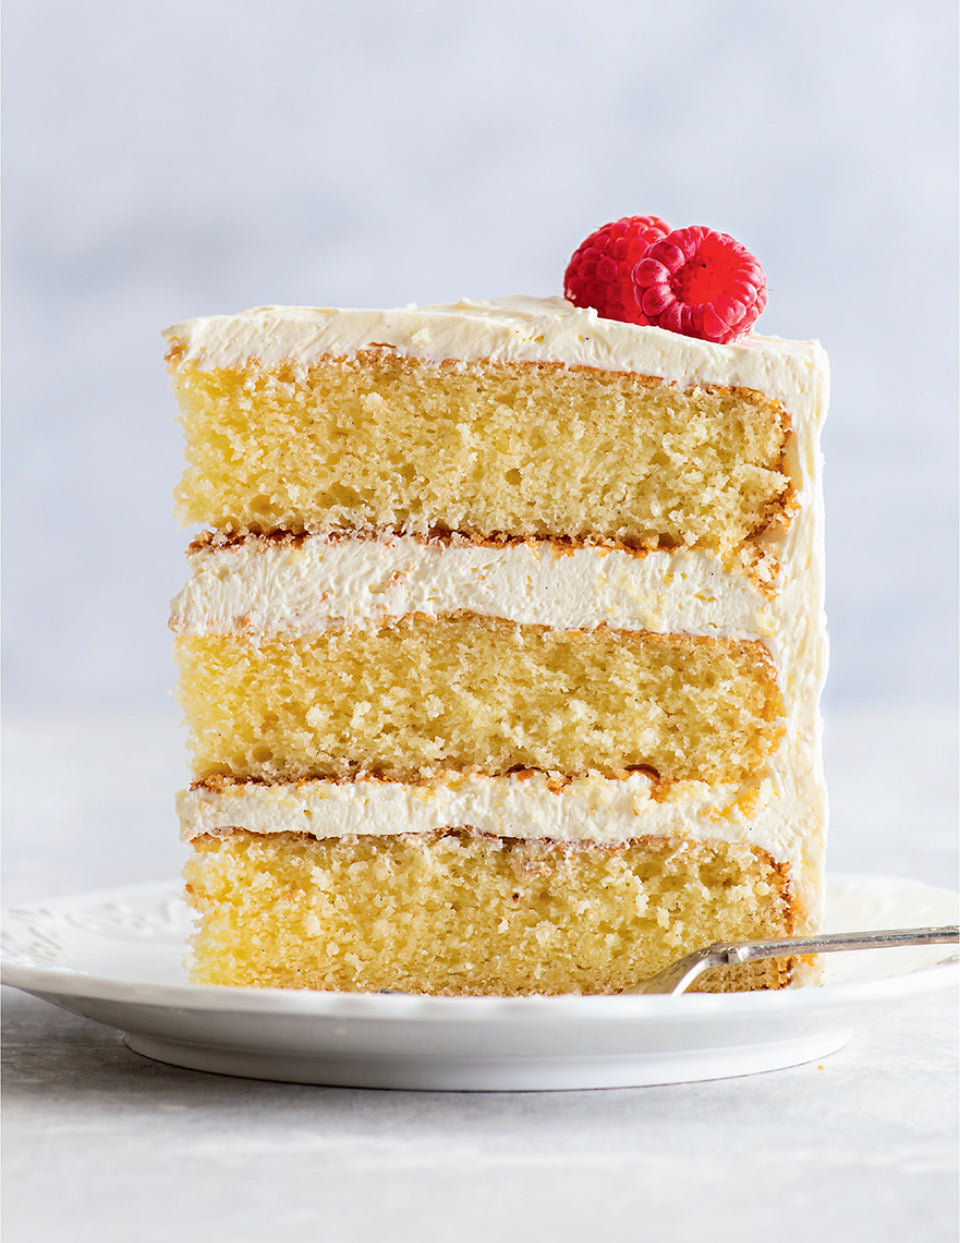 Gluten-free Vanilla Cake with Swiss Meringue buttercream